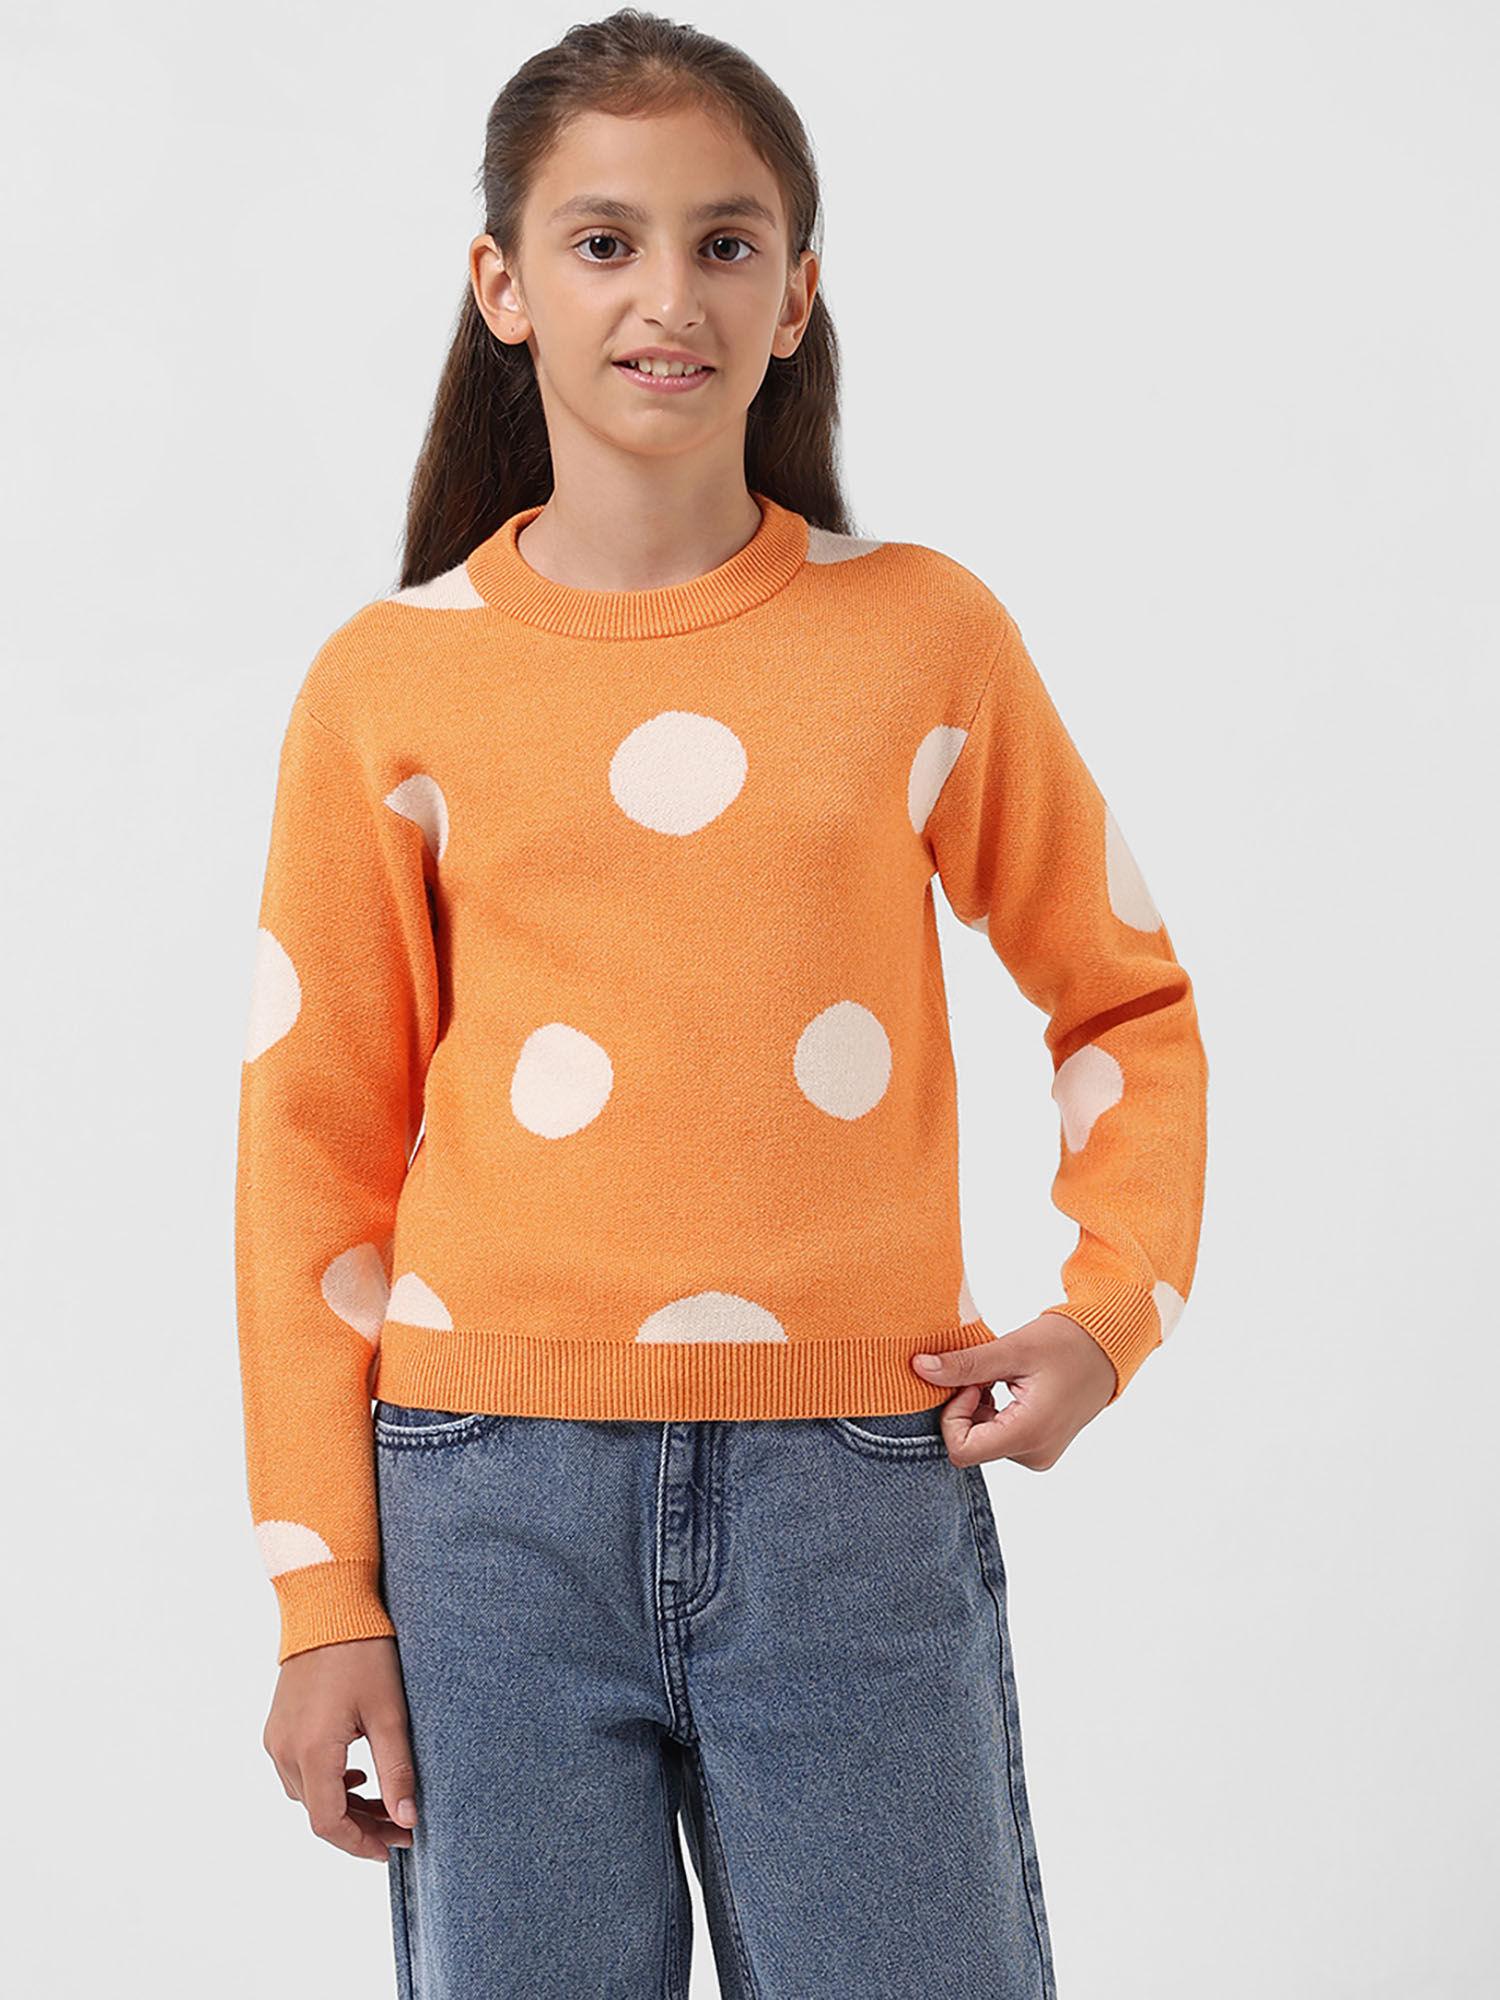 girls-polka-dots-orange-sweater